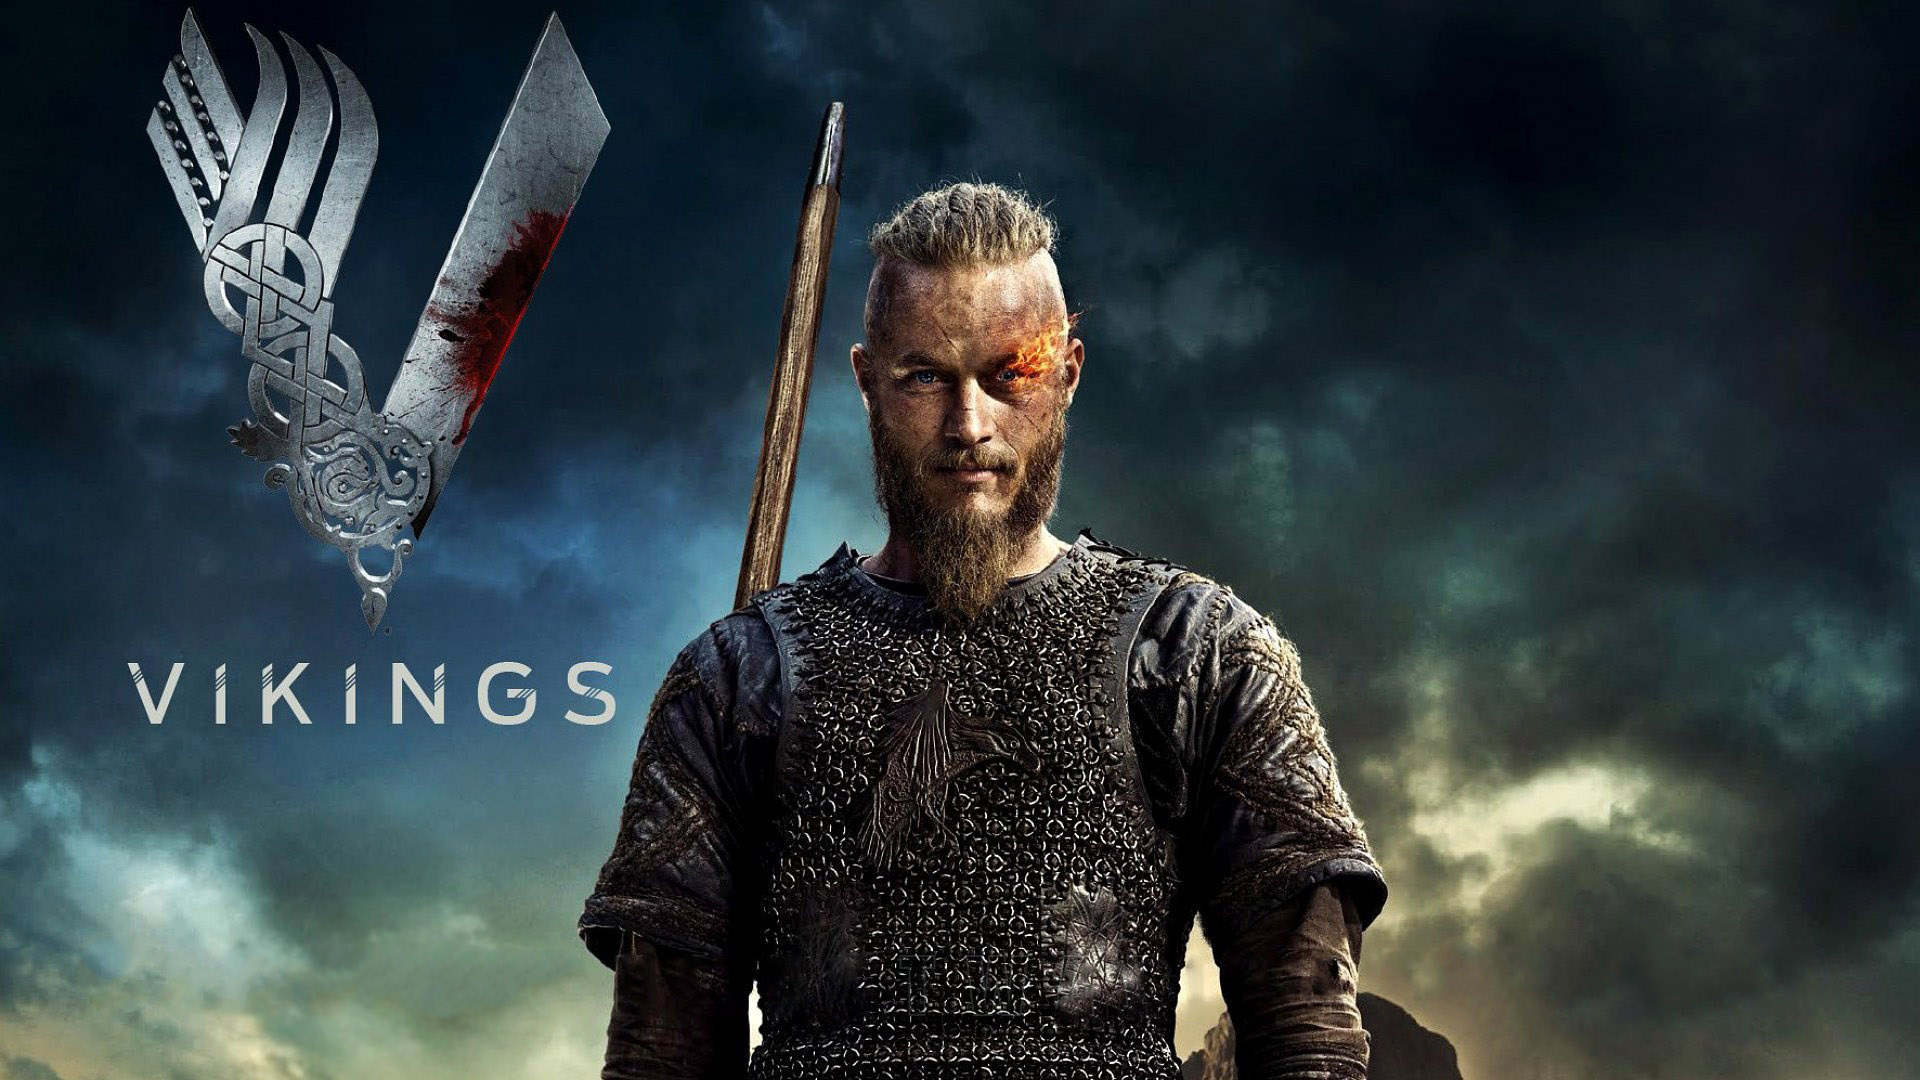 Travis-Fimmel-As-Ragnar-Lothbrok-In-Vikings-Wallpaper